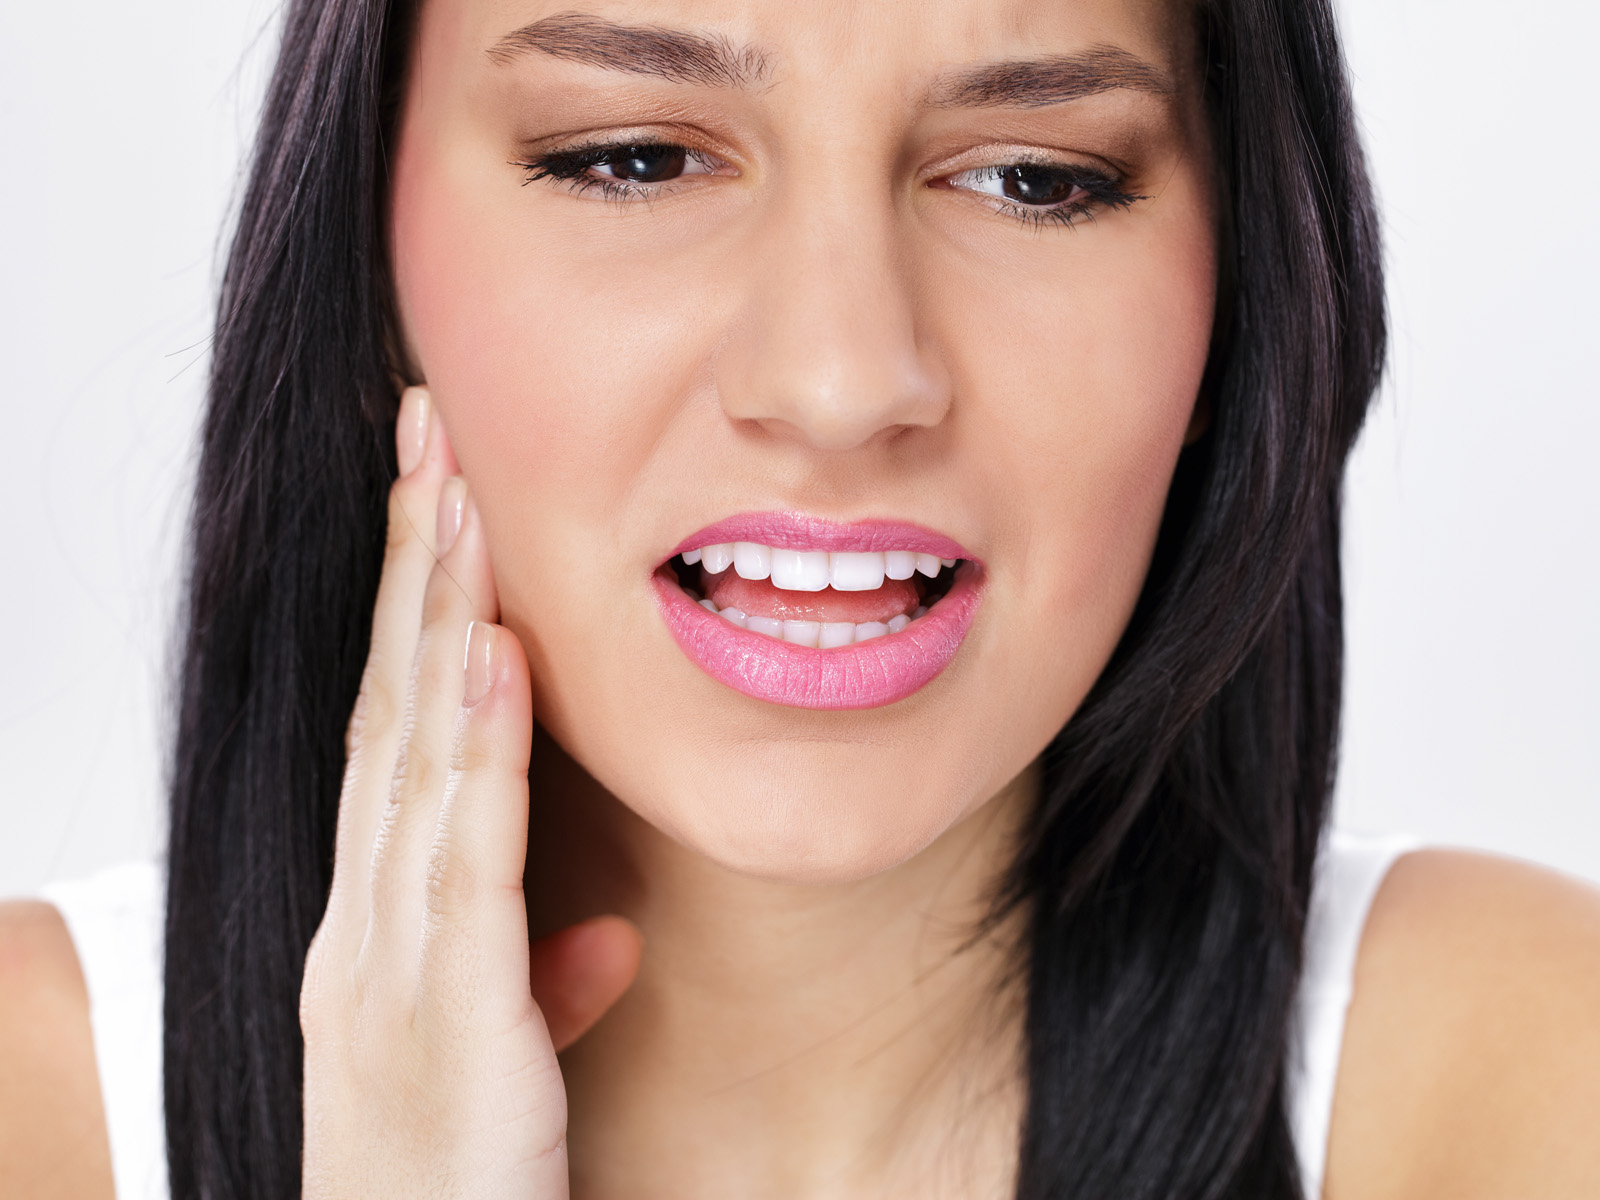 6 Habits That Harm Your Teeth